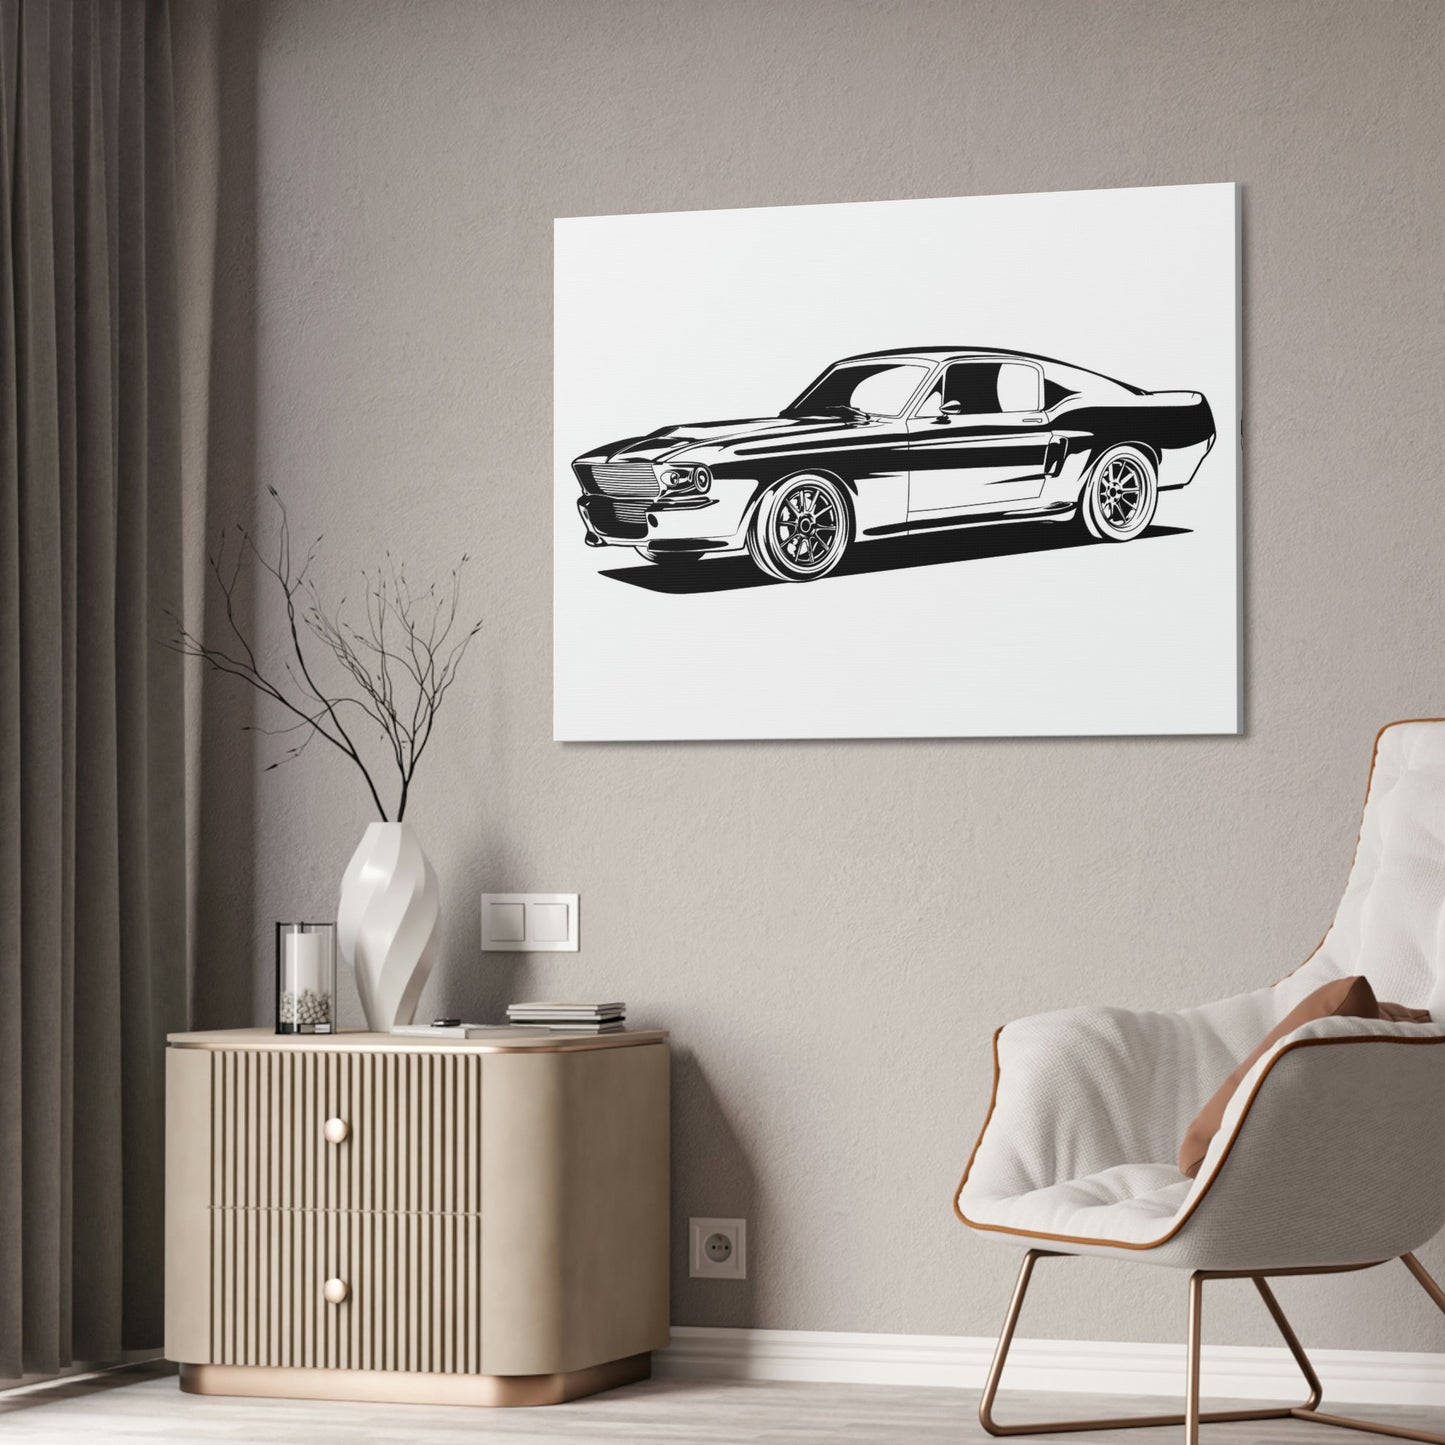 Racing Spirit: Mustang Framed Canvas Print and Wall Art